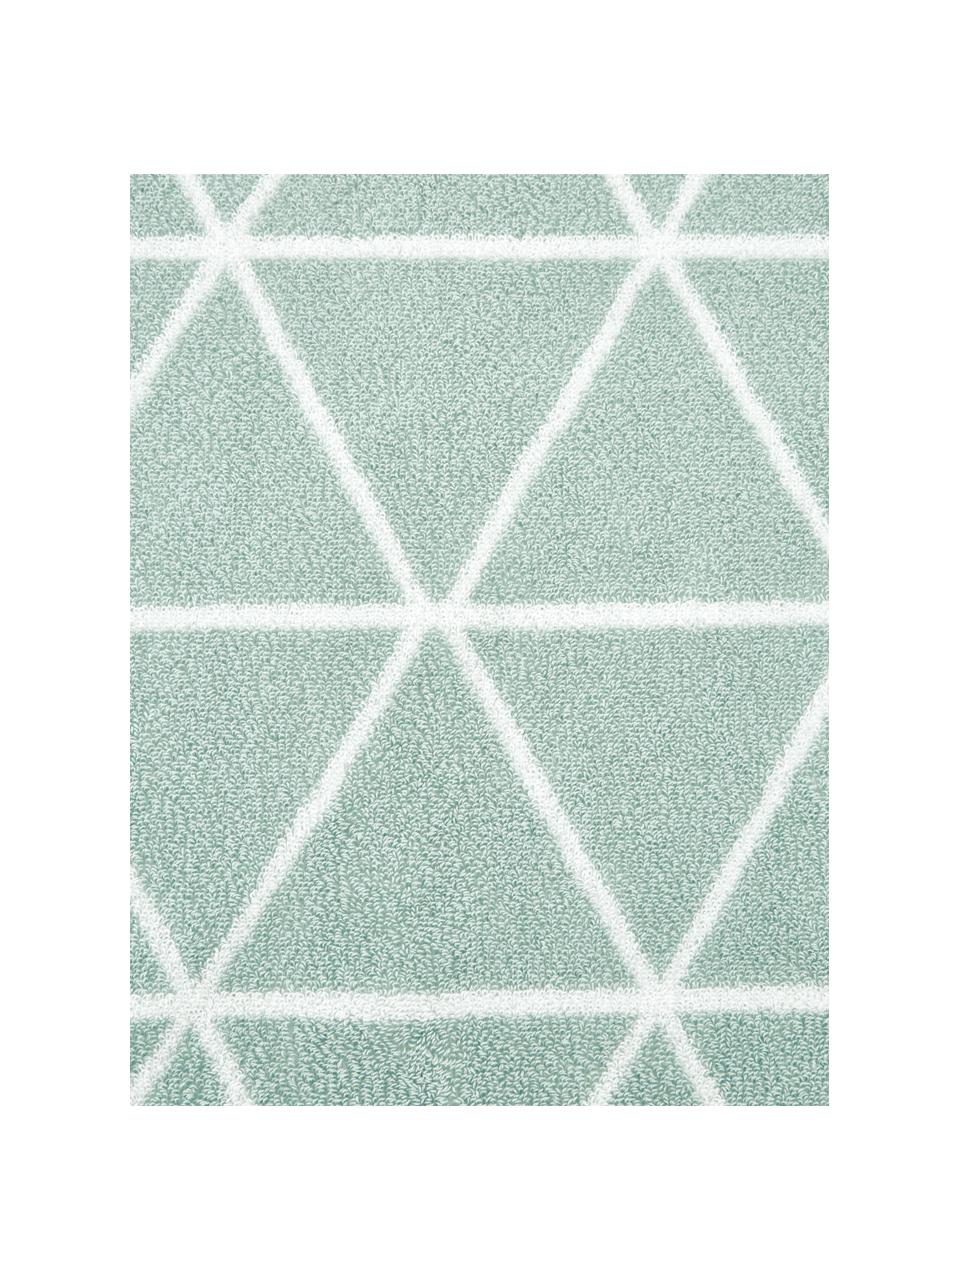 Set 3 asciugamani reversibili con motivo grafico Elina, Verde menta, bianco crema, Set in varie misure